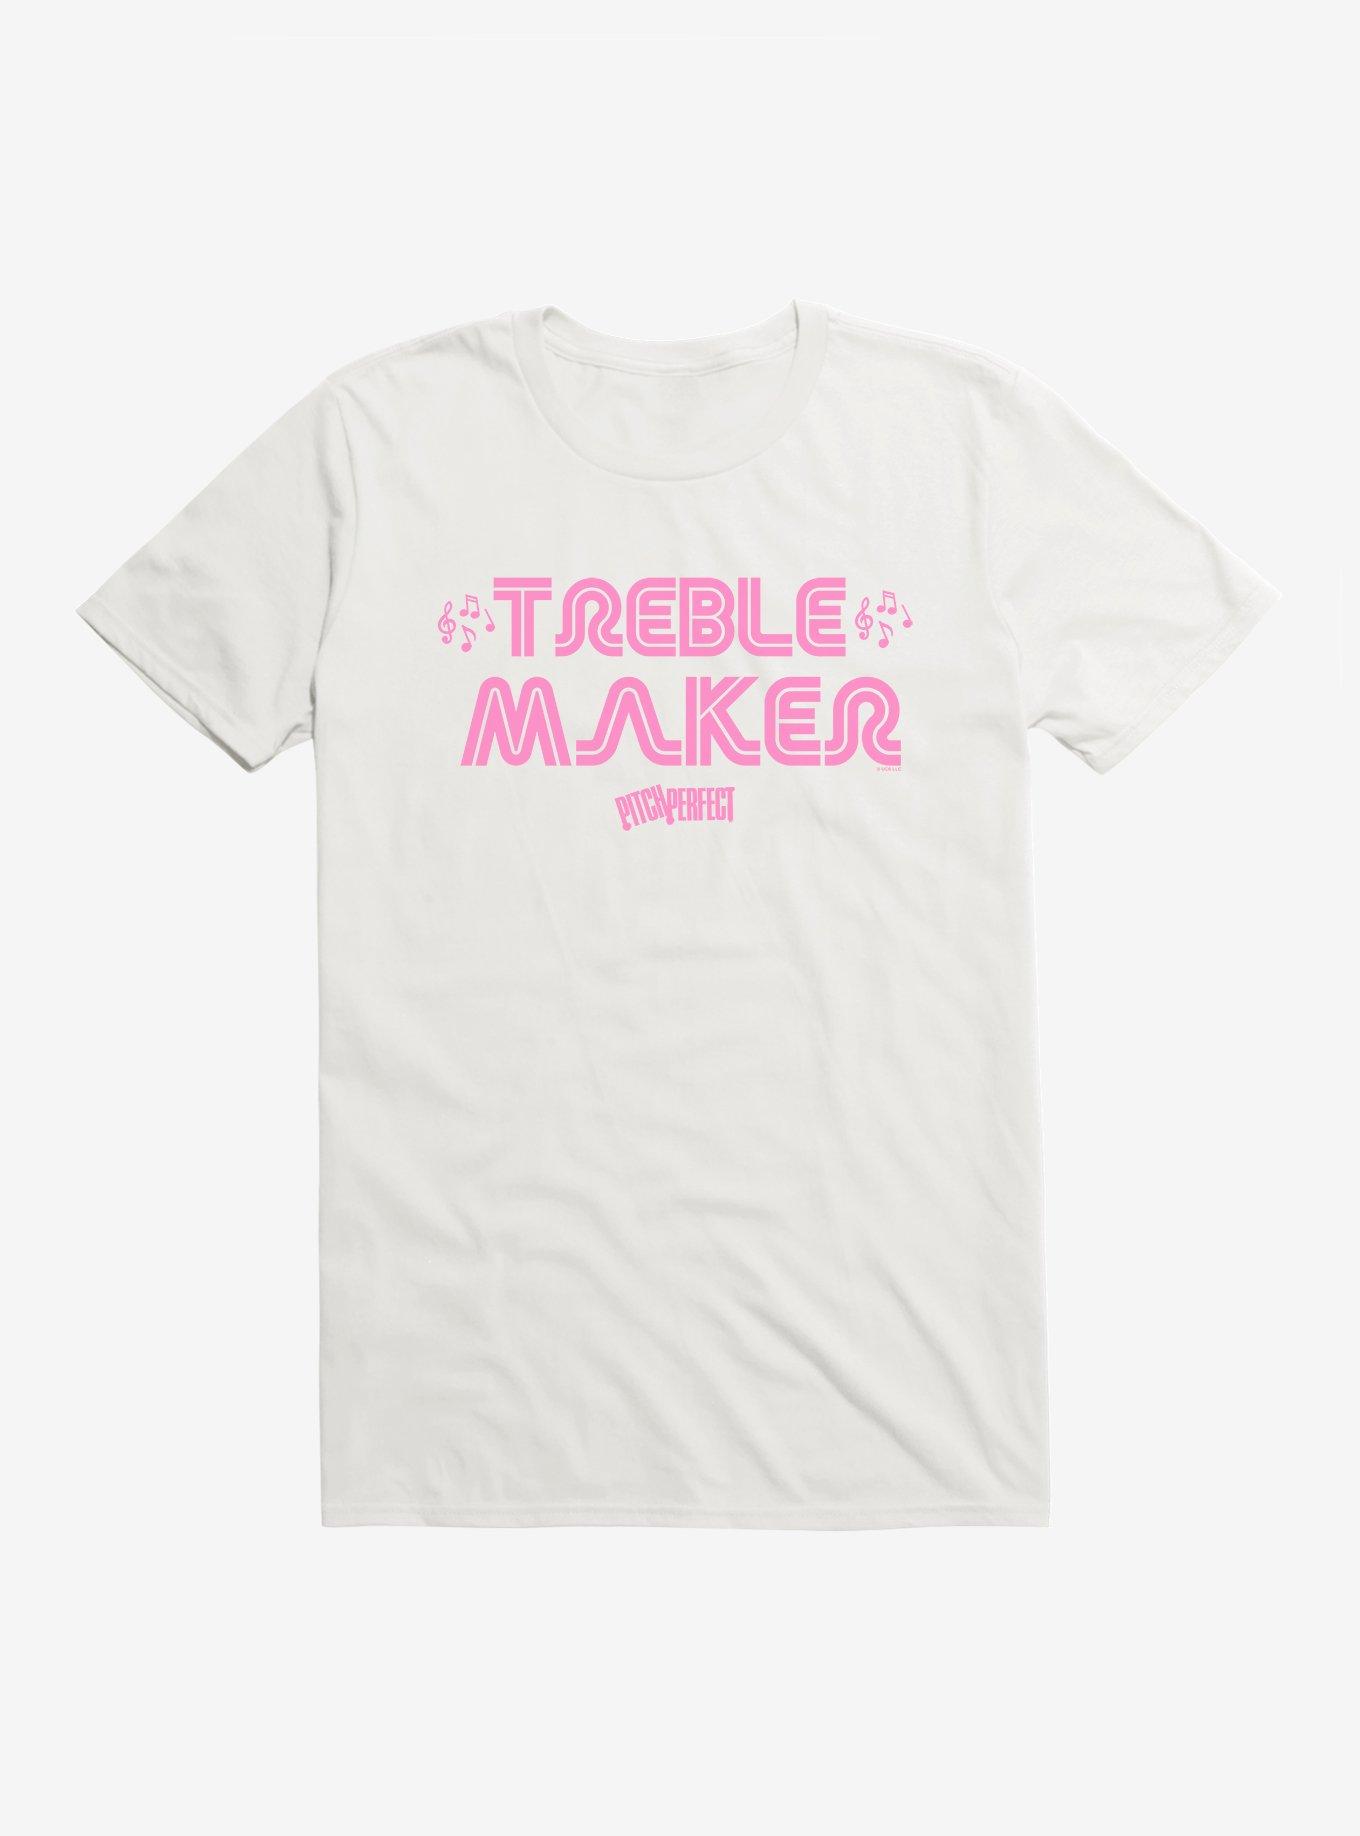 Pitch Perfect Treble Maker T-Shirt